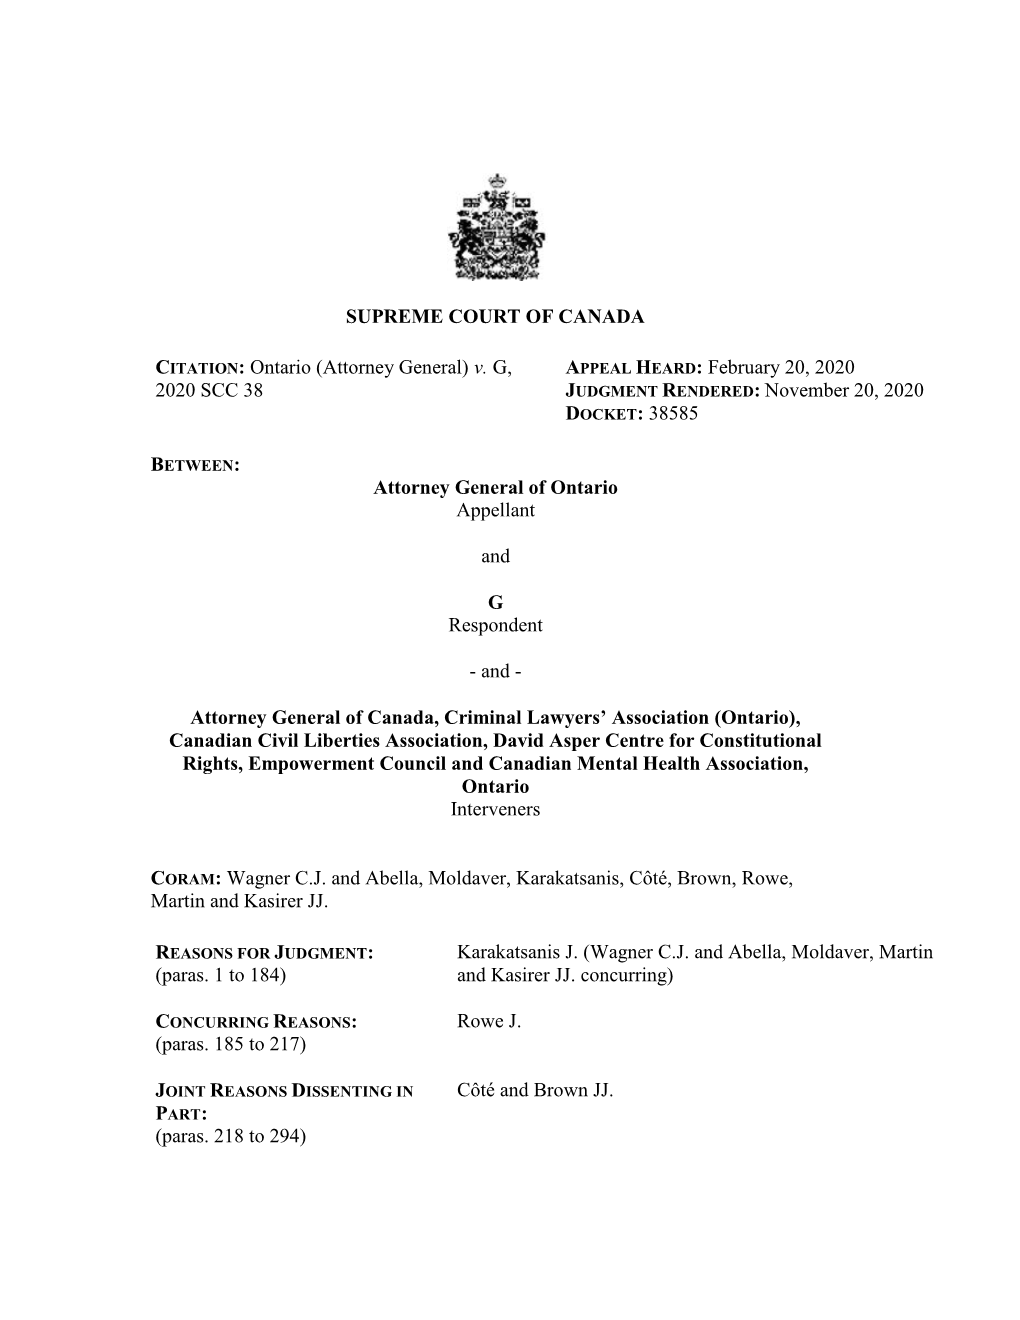 Ontario (Attorney General) V. G, 2020 SCC 38 APPEAL HEARD